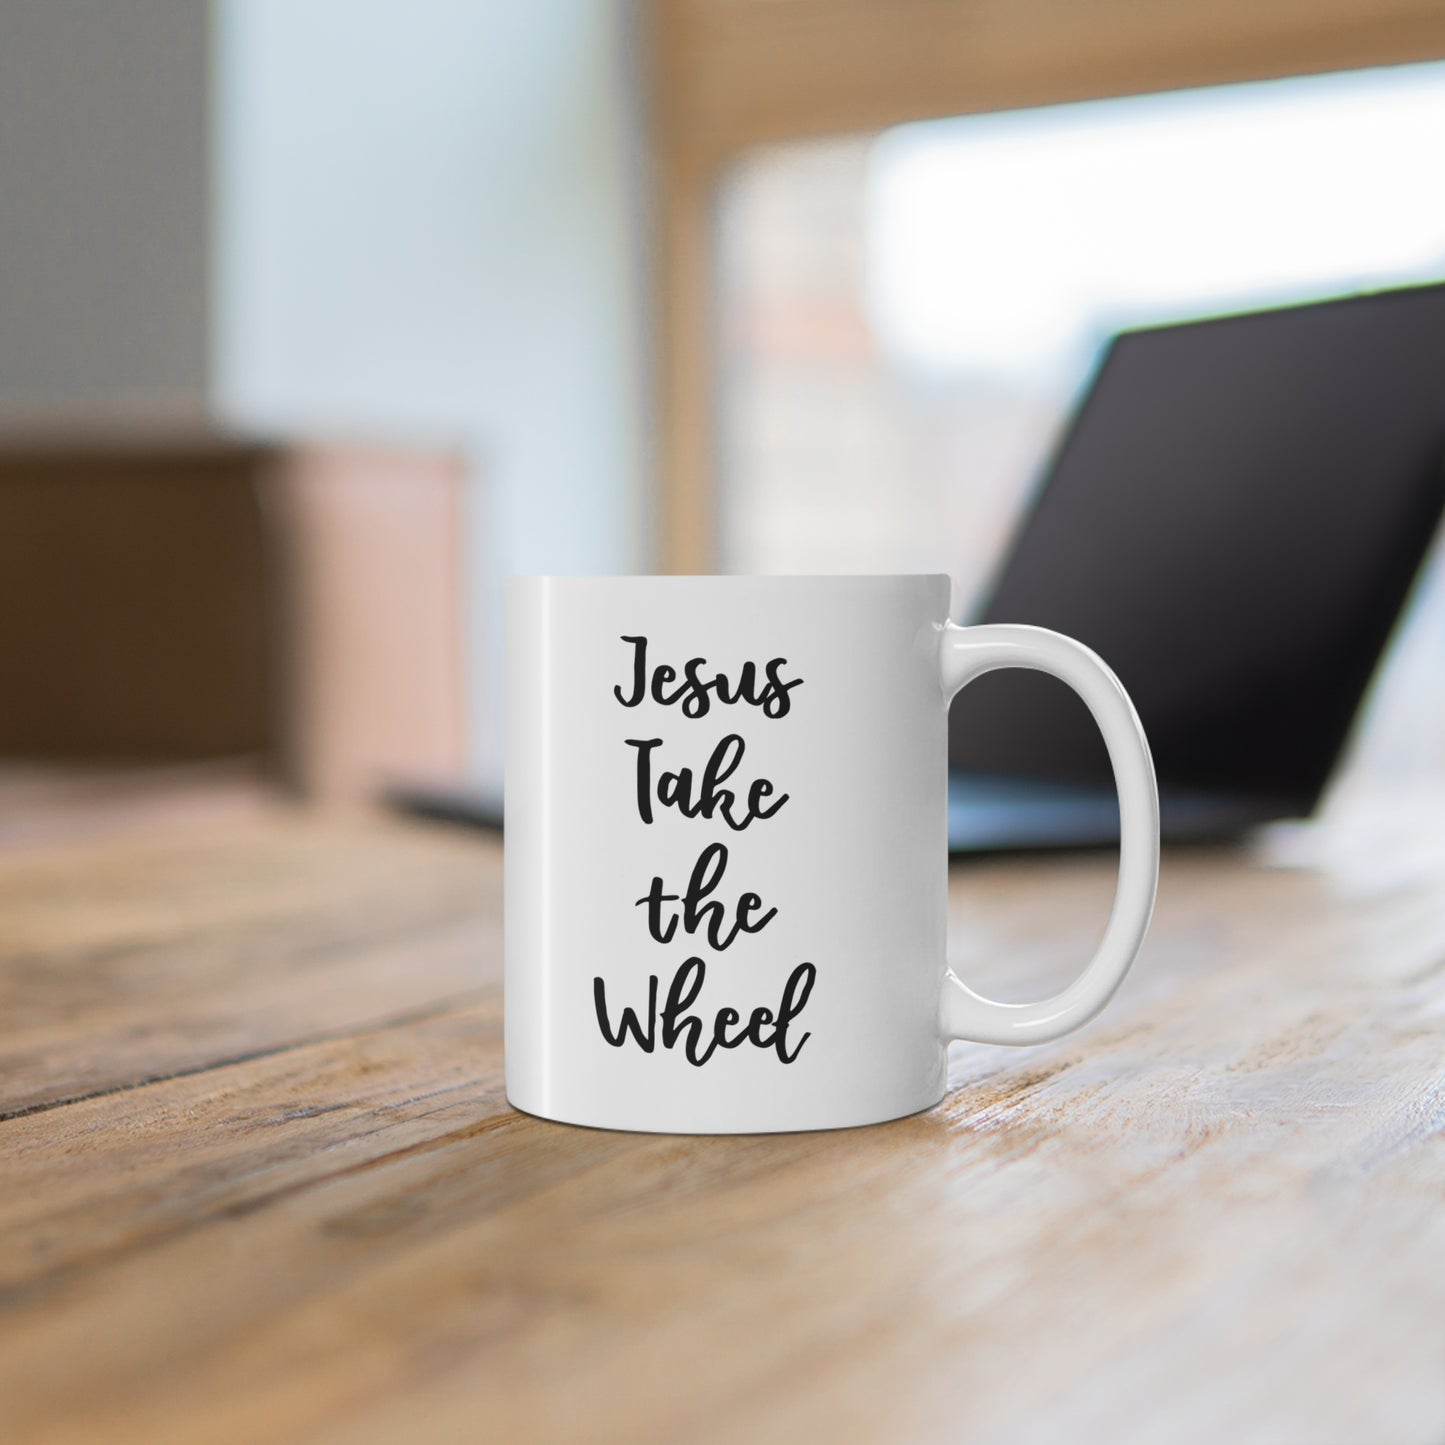 11oz ceramic mug with quote Jesus Take the Wheel